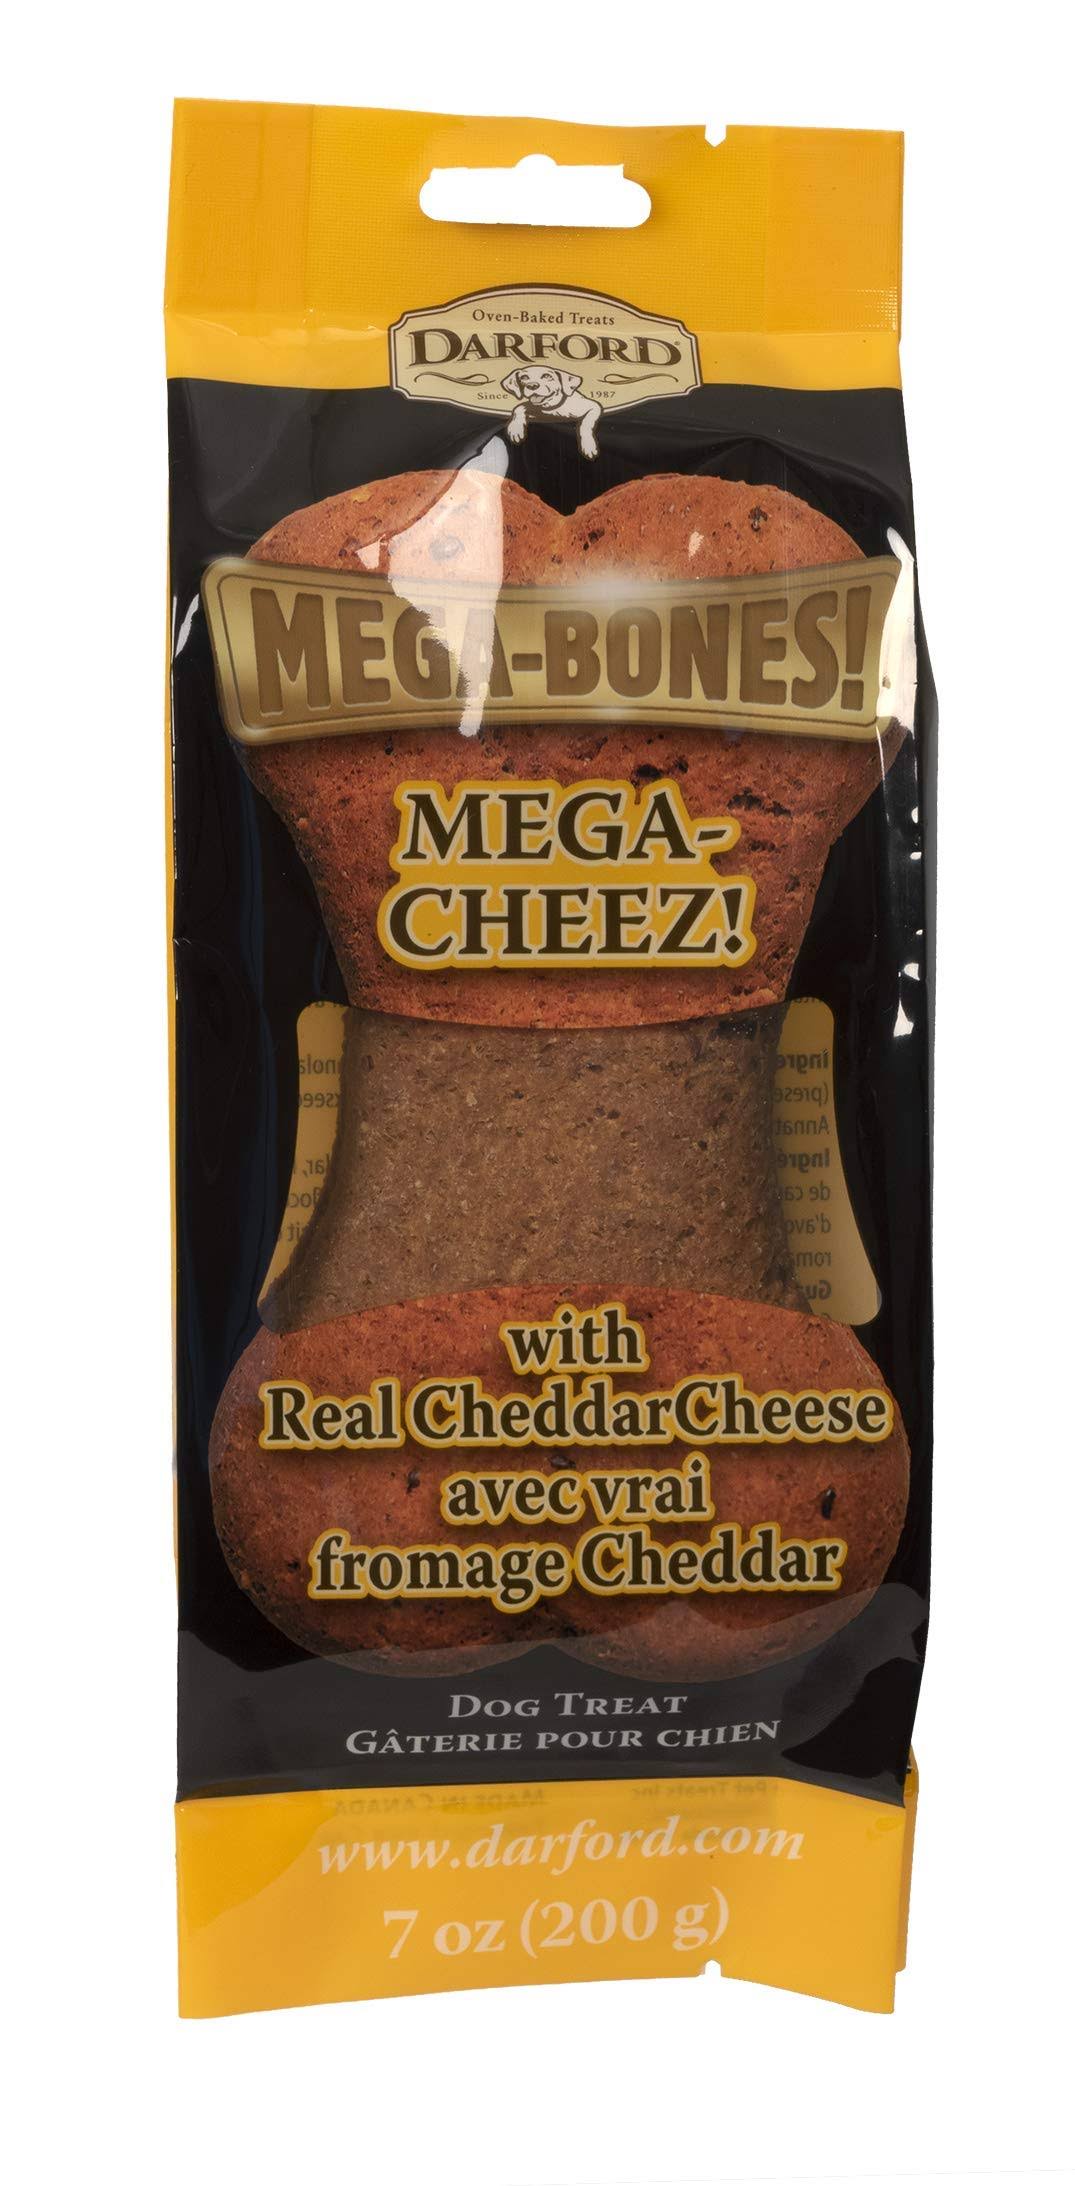 Darford Dog Treat - Mega Cheese, 7oz